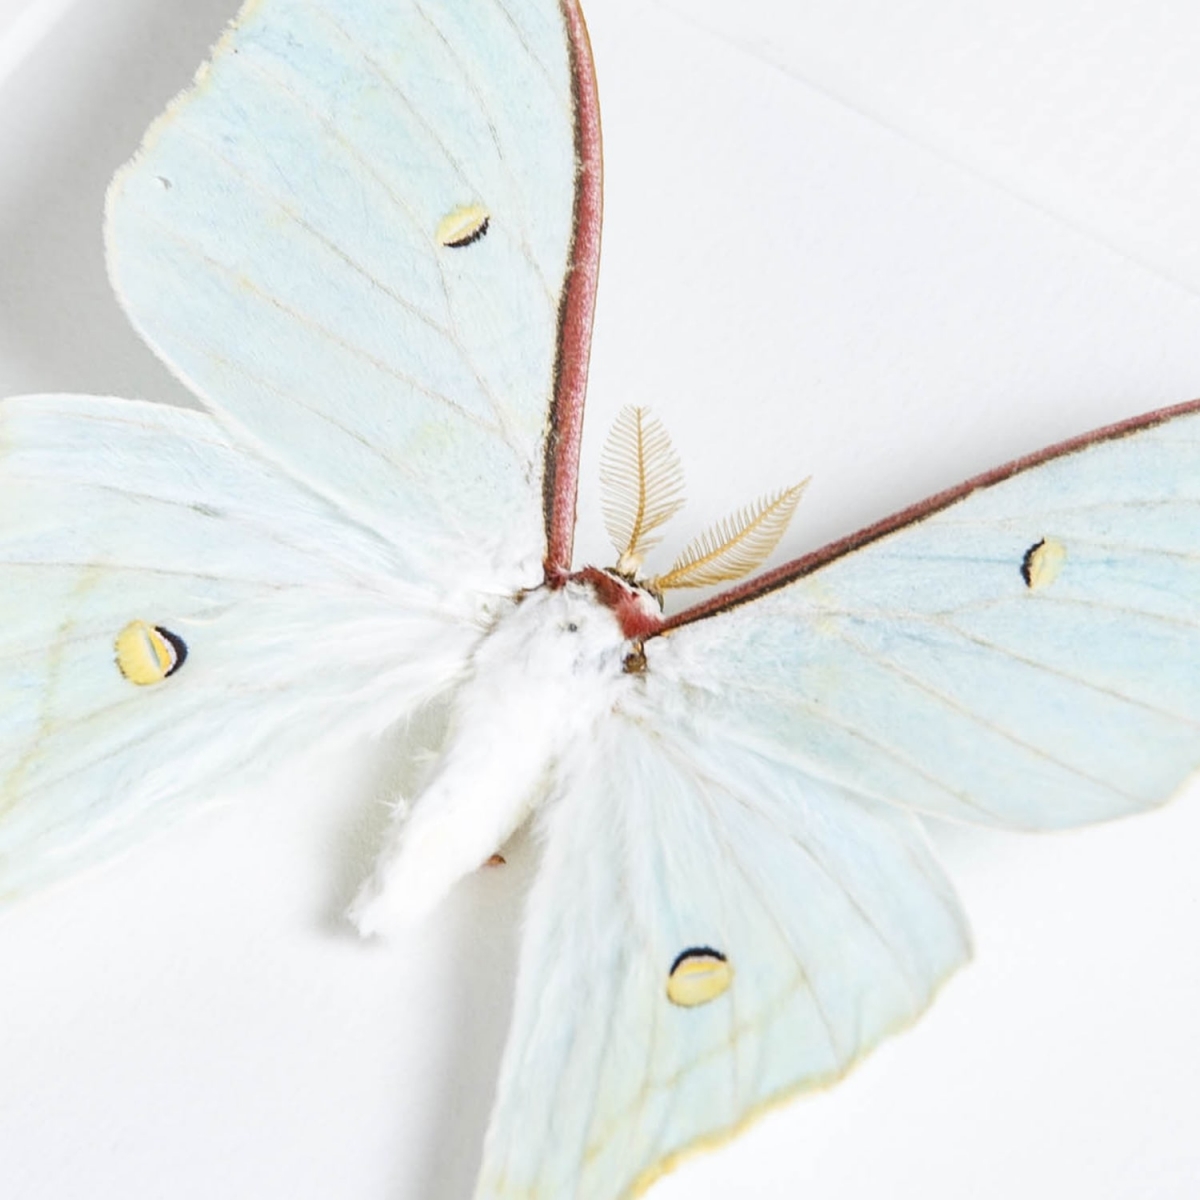 Male Sweetheart Moon Moth In Box Frame (Actias dulcinea)